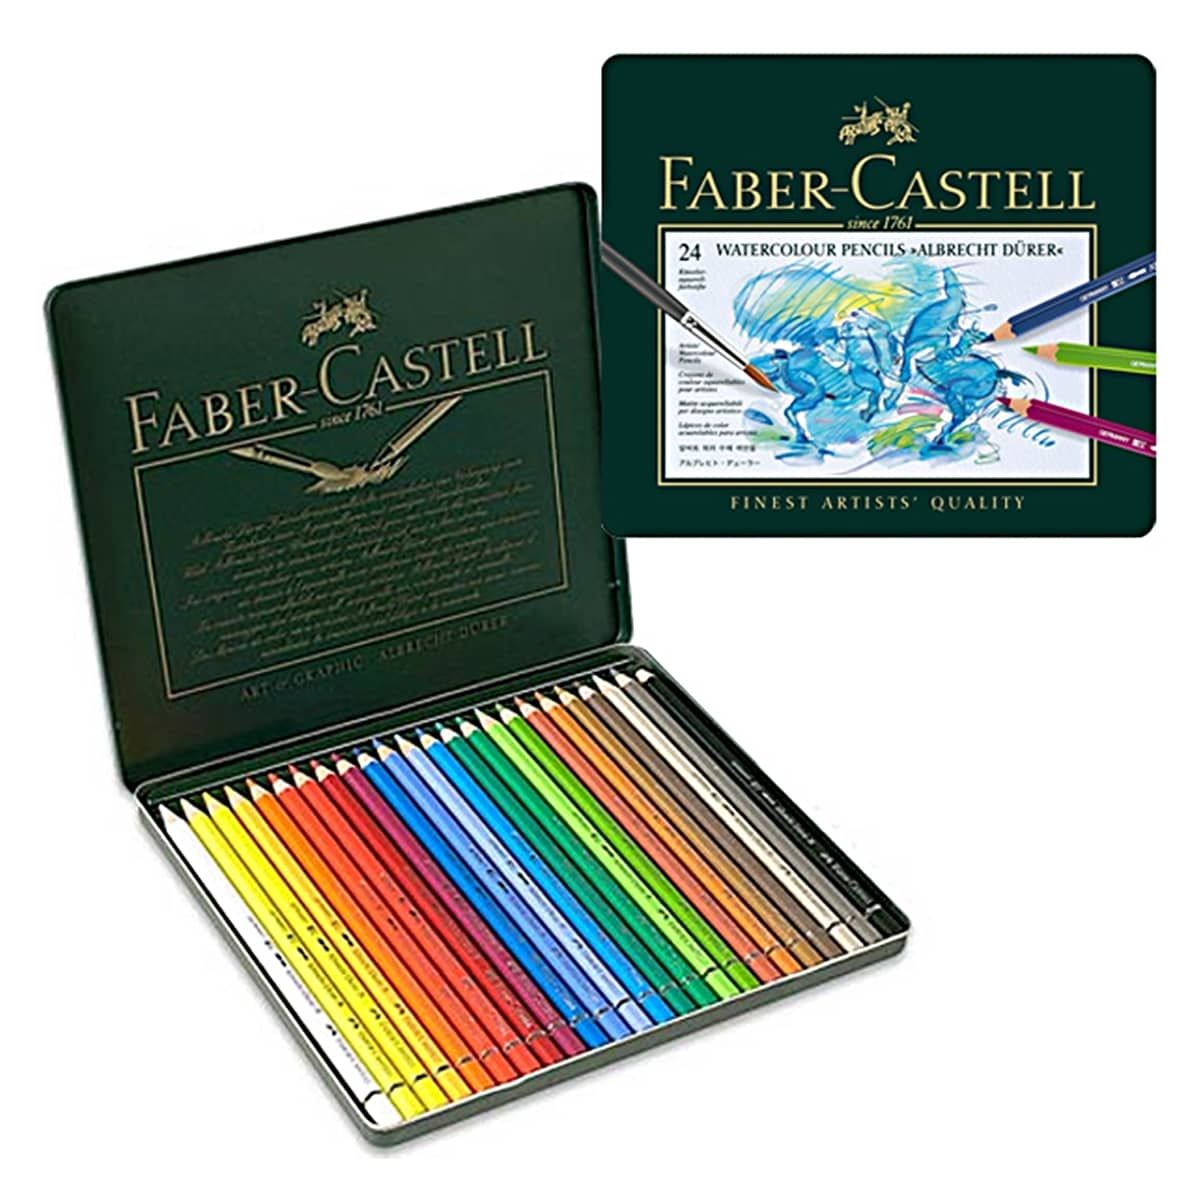 https://www.jerrysartarama.com/media/catalog/product/cache/ecb49a32eeb5603594b082bd5fe65733/f/a/faber-castell-watercolor-pencil-albrecht-durer-tin-set-24-49783_1.jpg